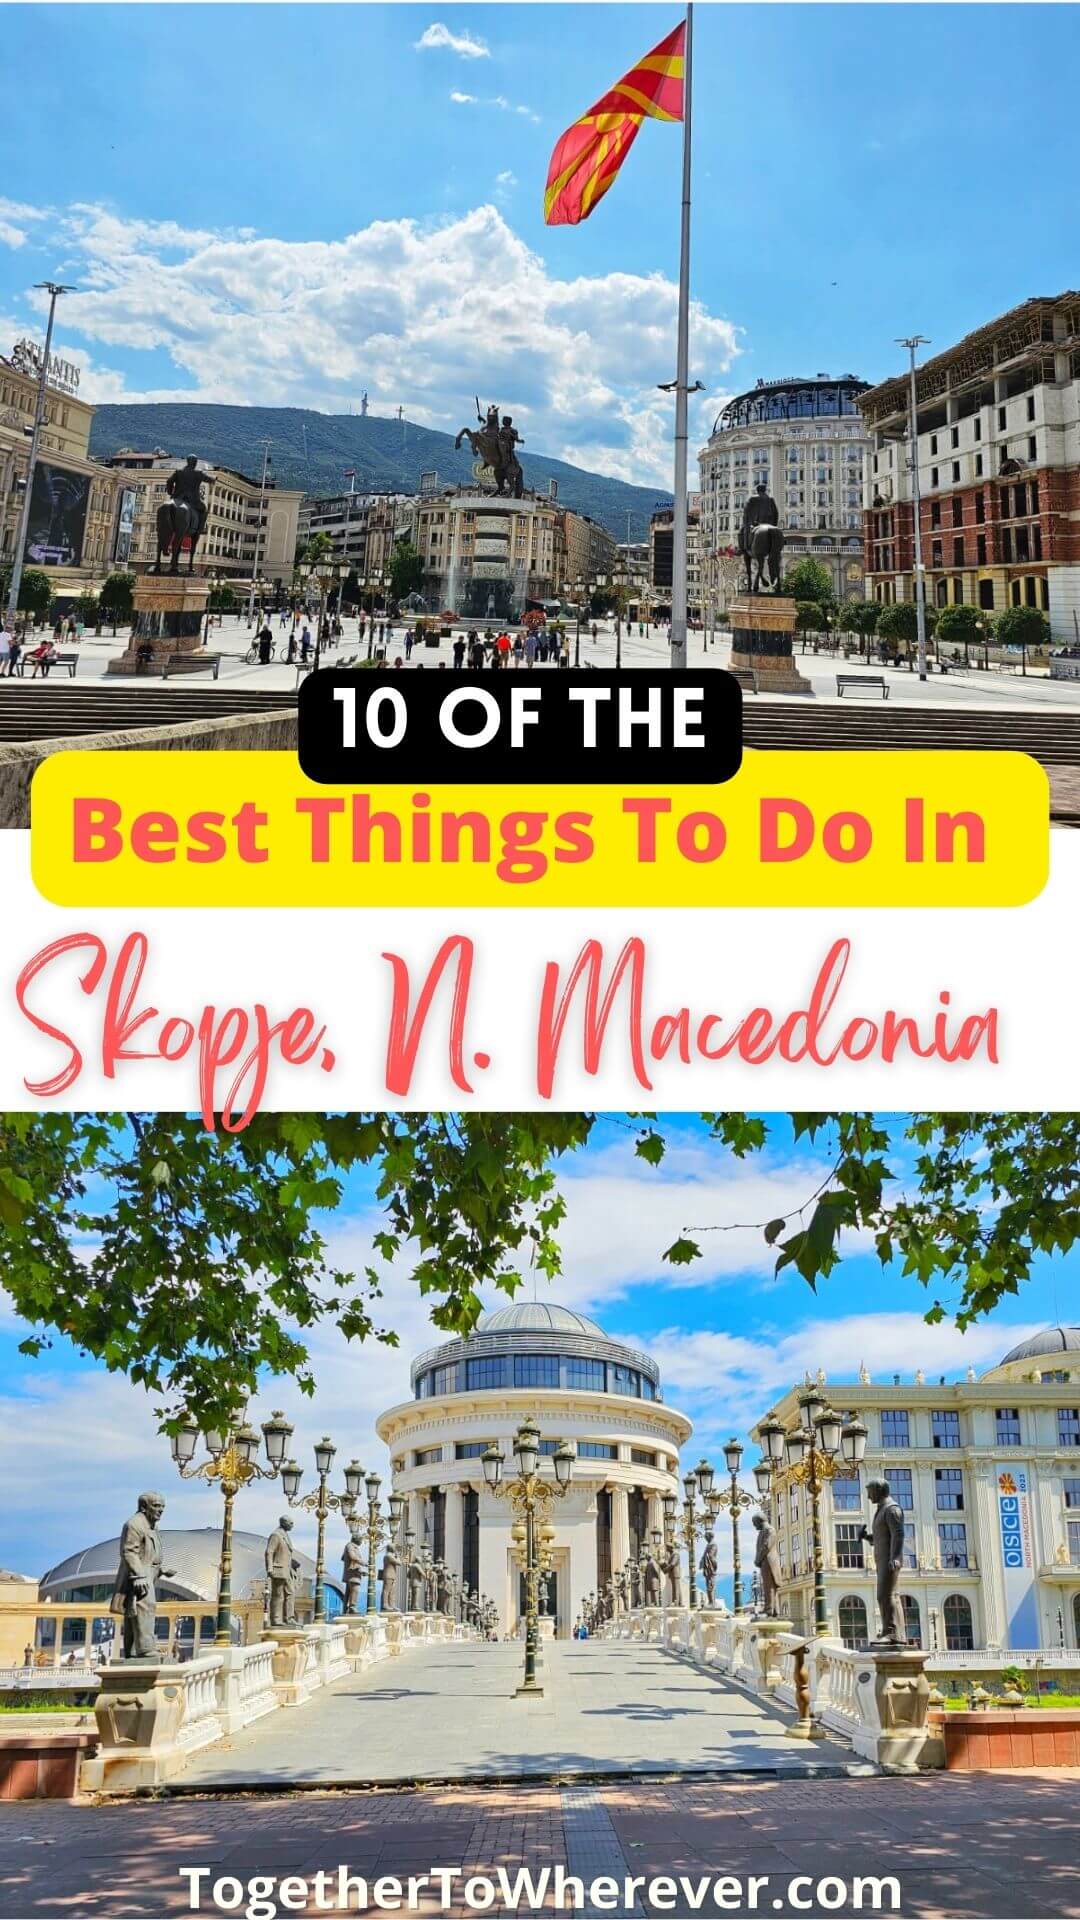 Skopje North Macedonia - Things To Do